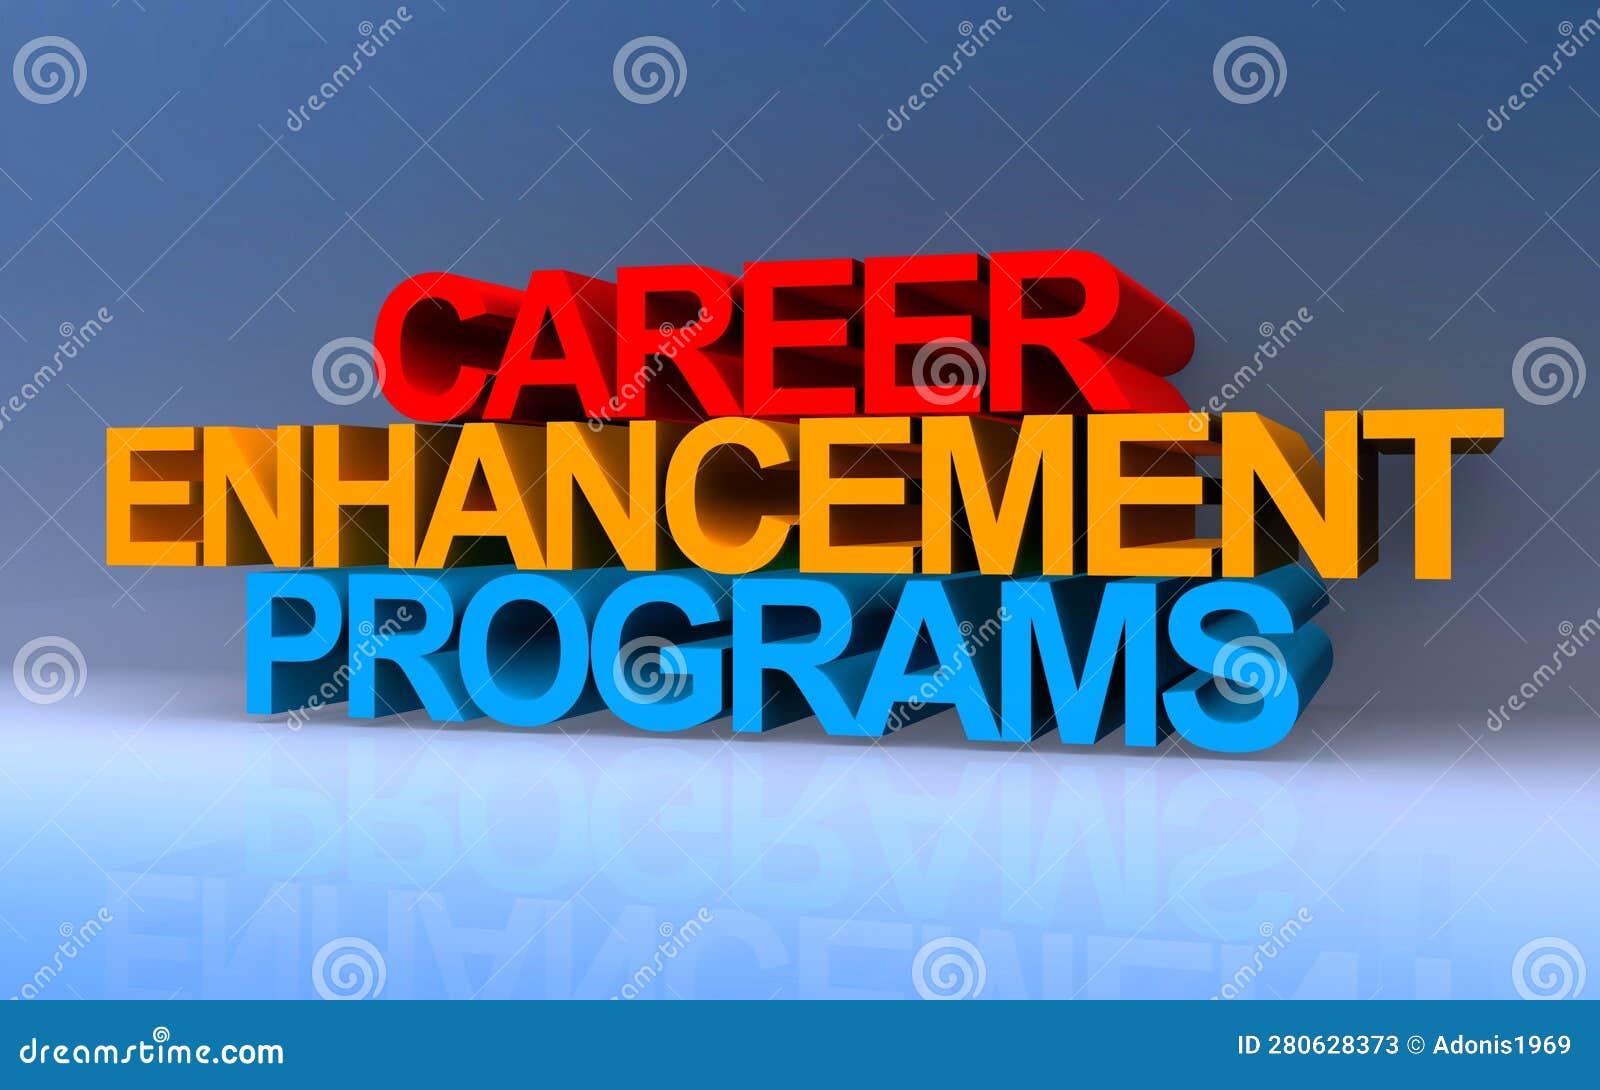 career enhancement programs on blue